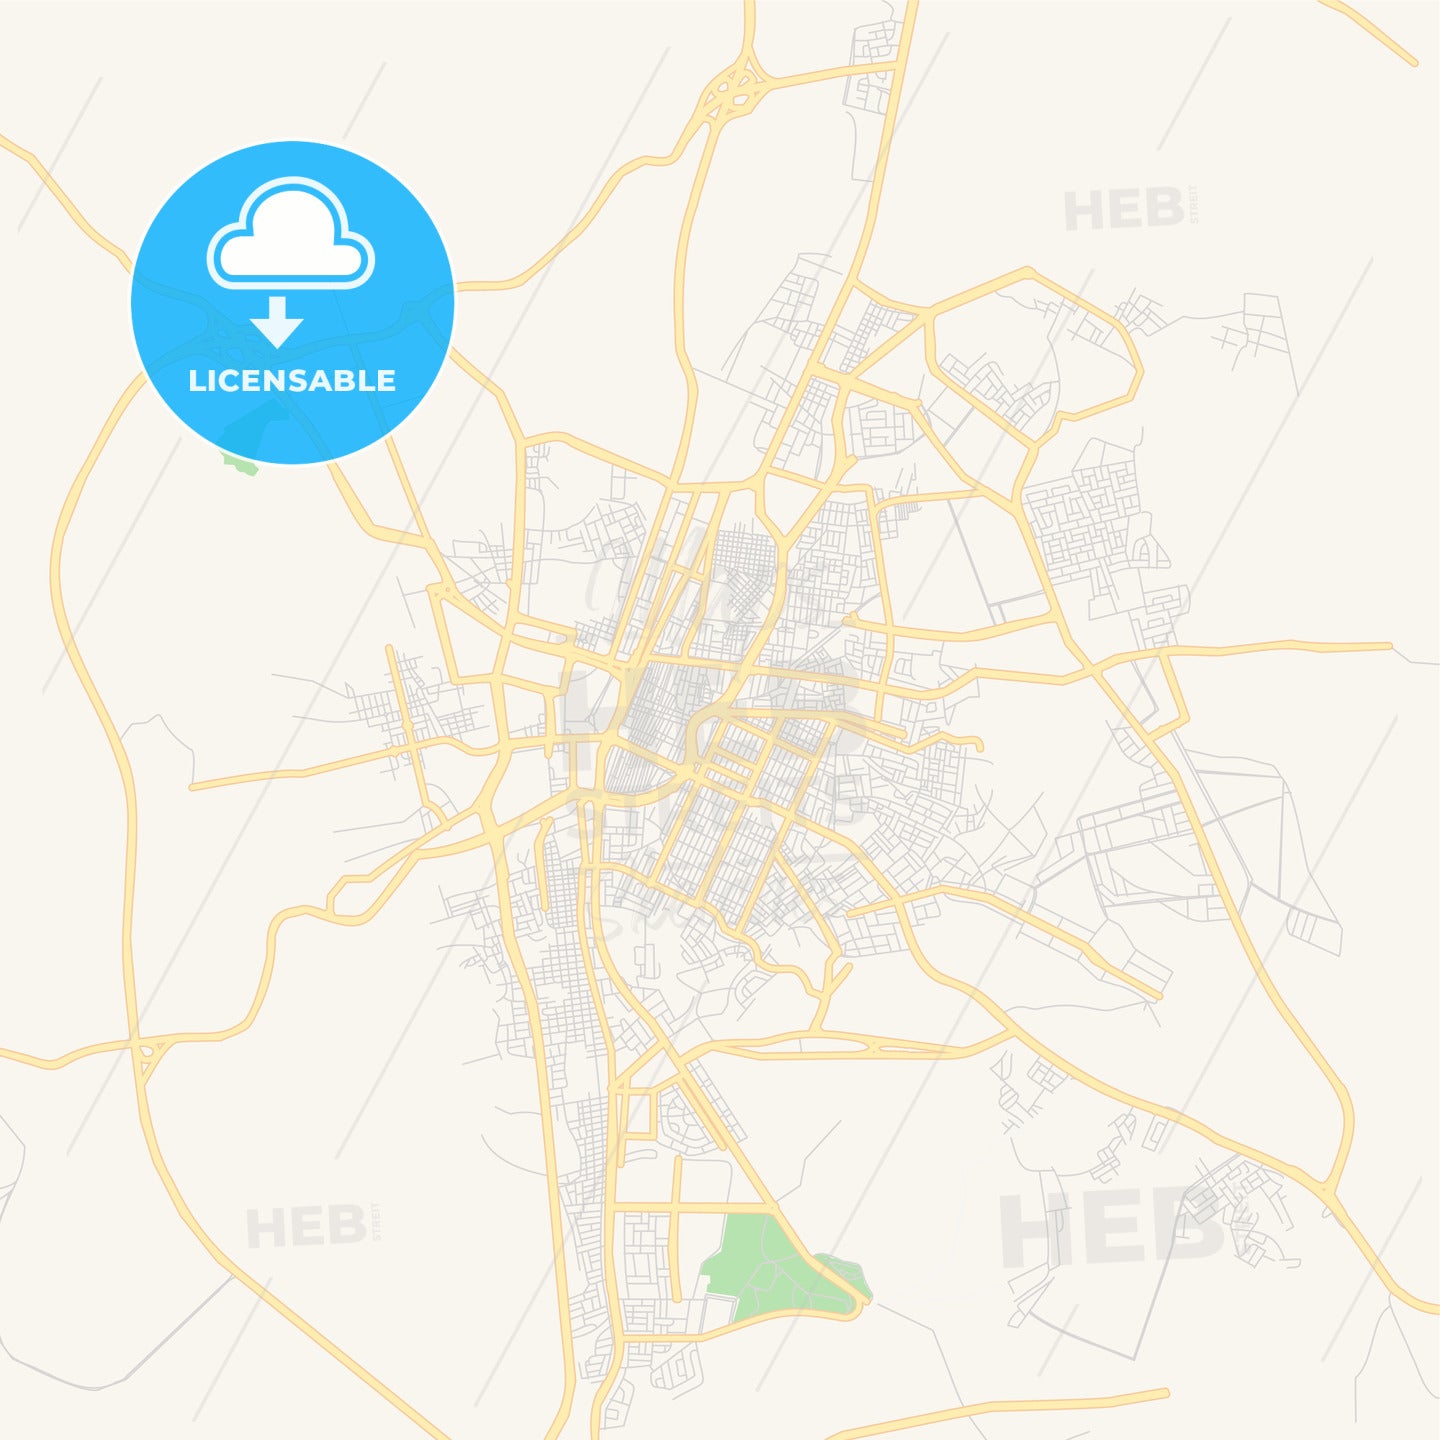 Printable street map of Taif, Saudi Arabia